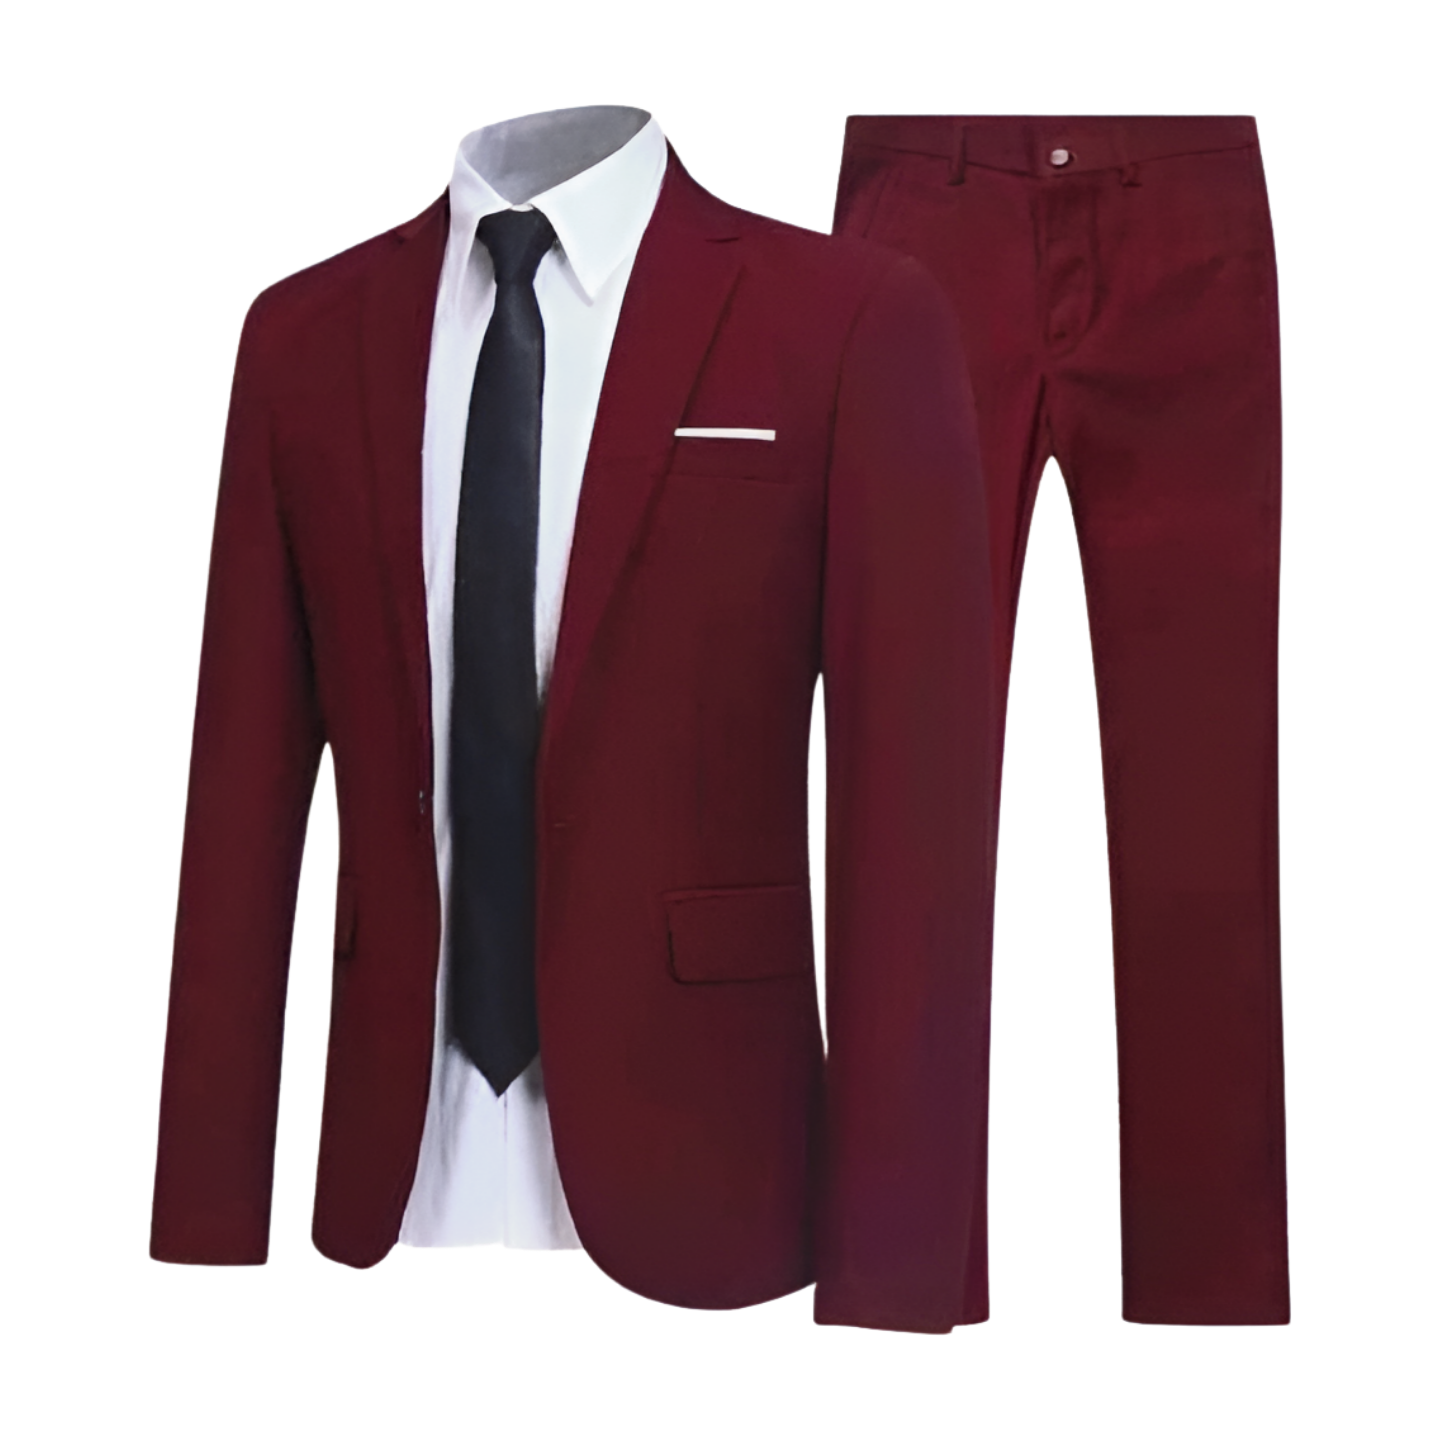 DIE CAPRI Complete Suit: Look Like A Million Bucks For Less | NobleMart